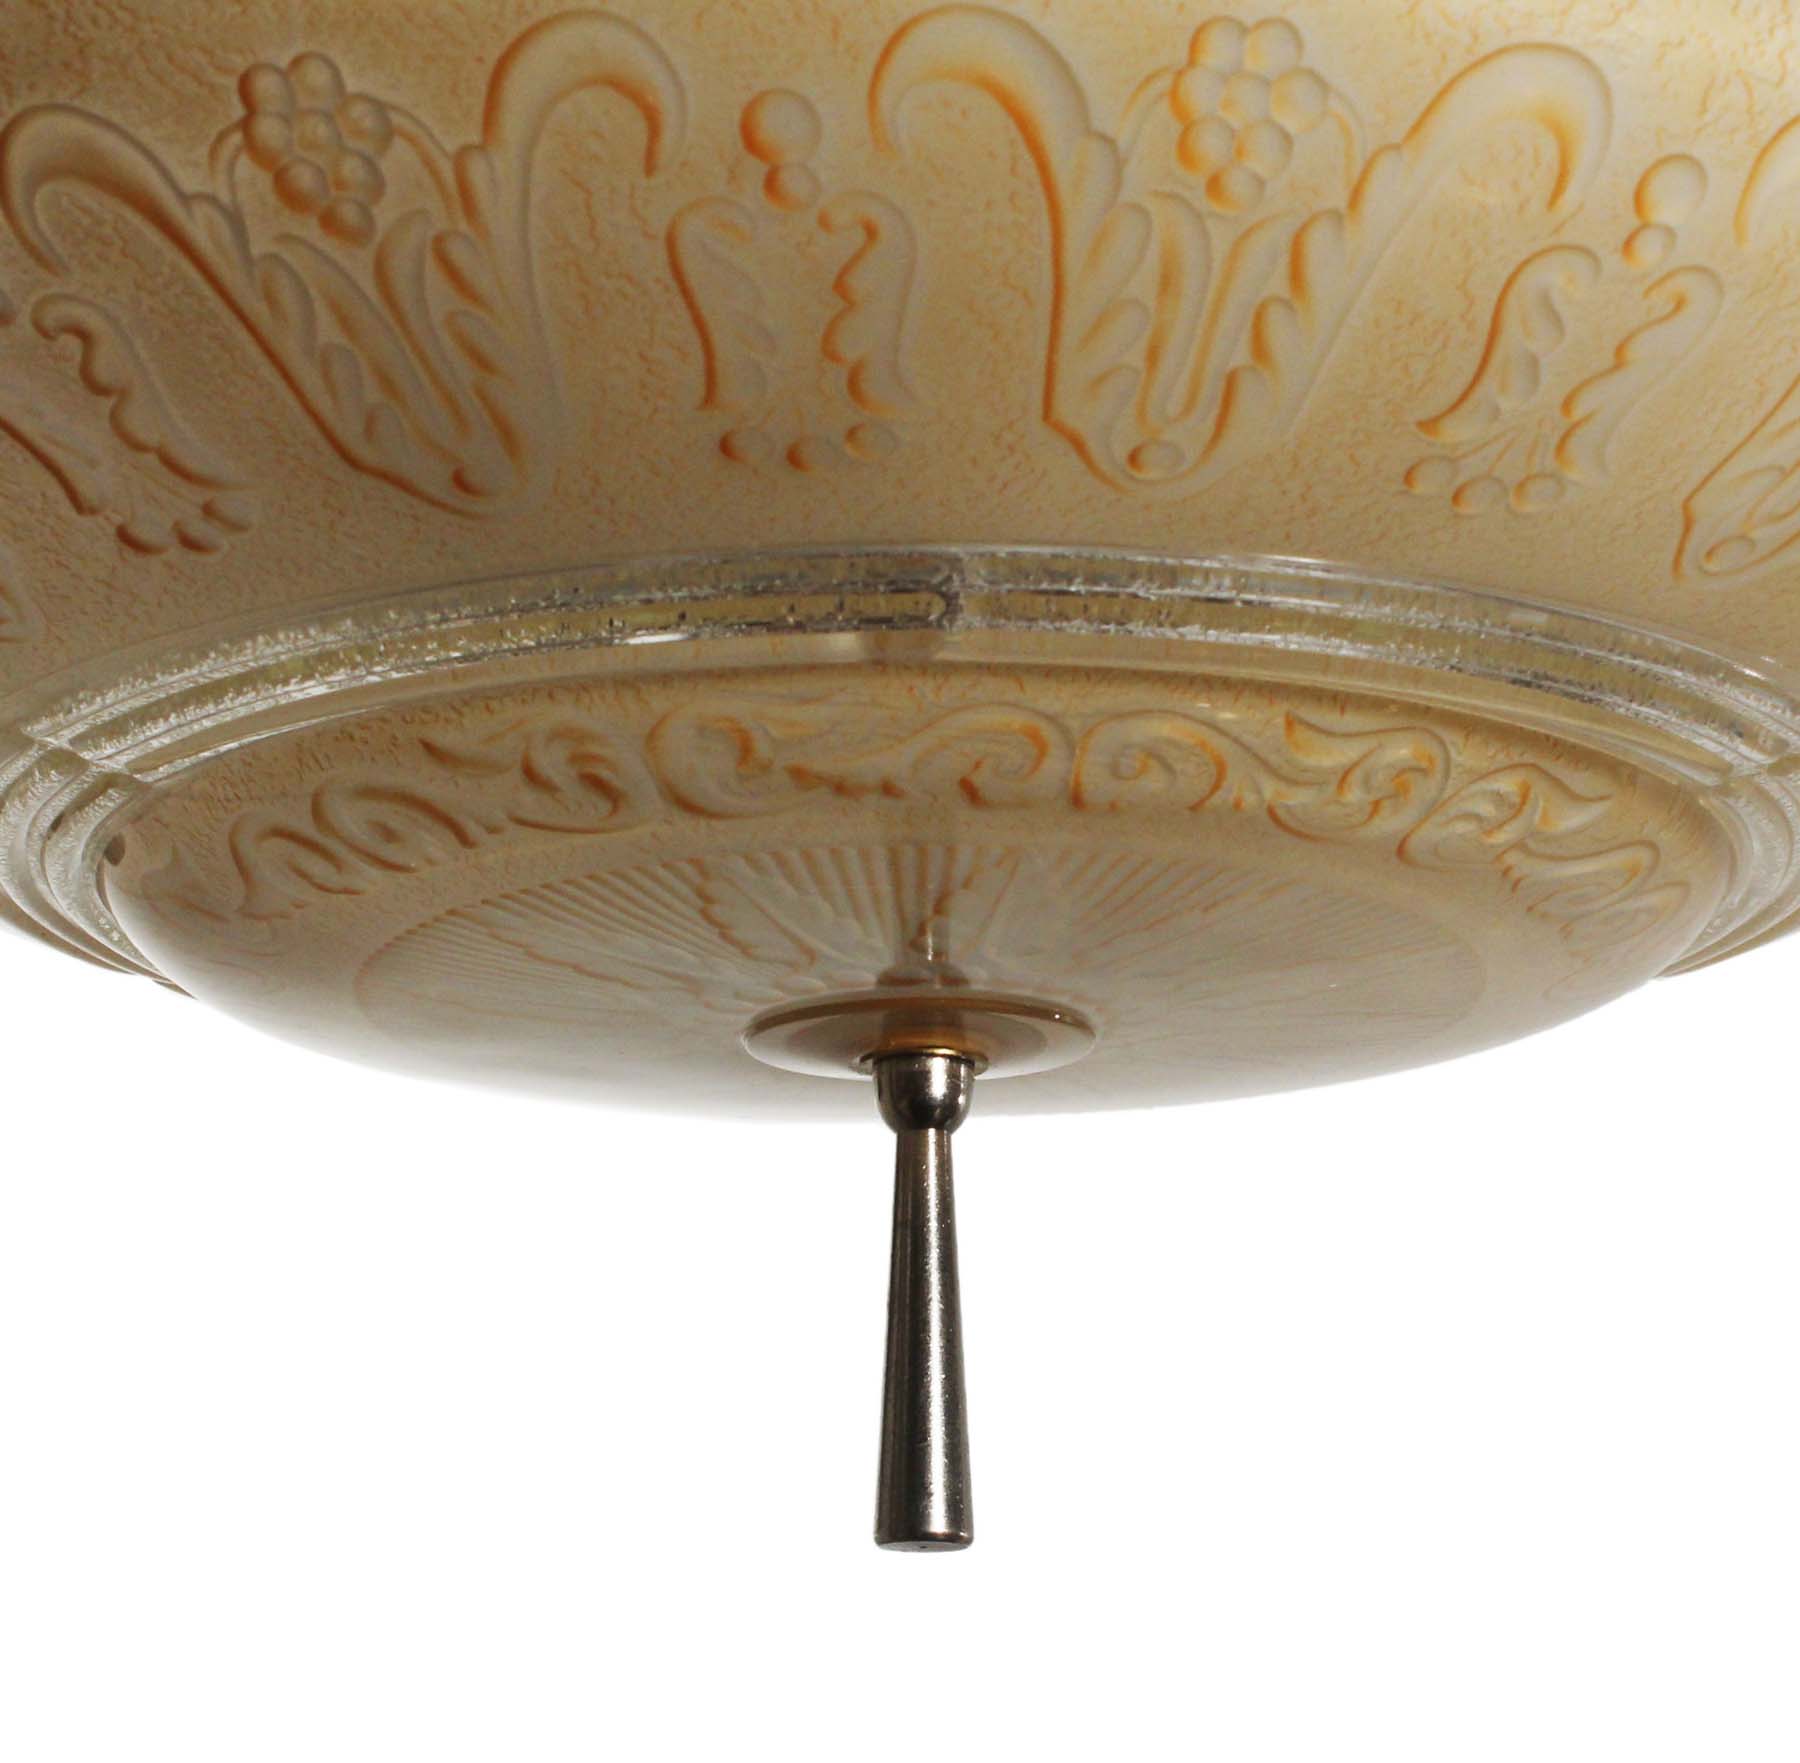 SOLD Pendant Light with Original Glass Shade, Vintage Lighting-68122